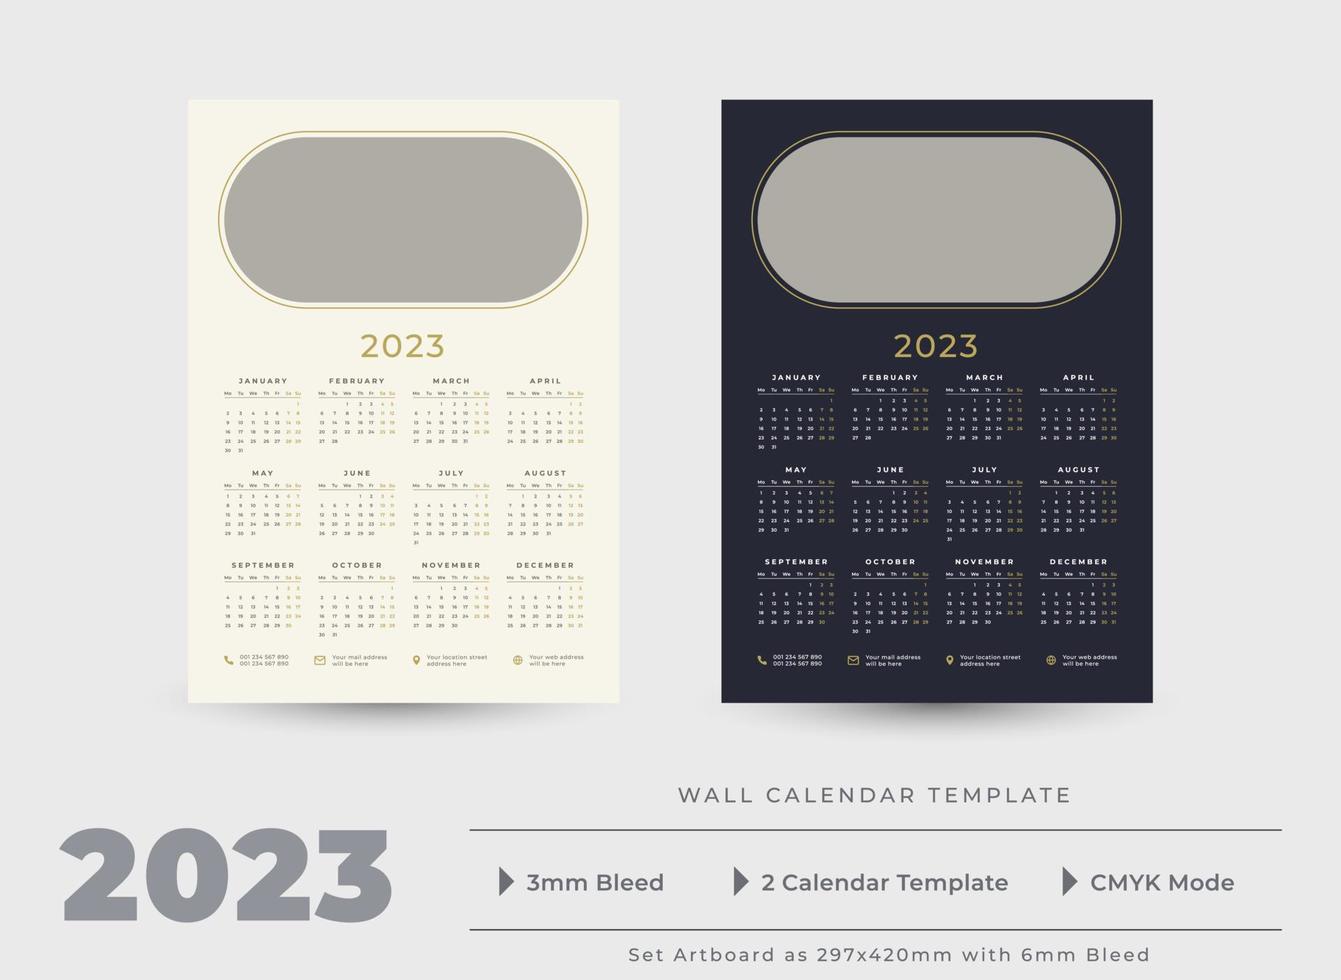 2023 Wall Calendar Template vector